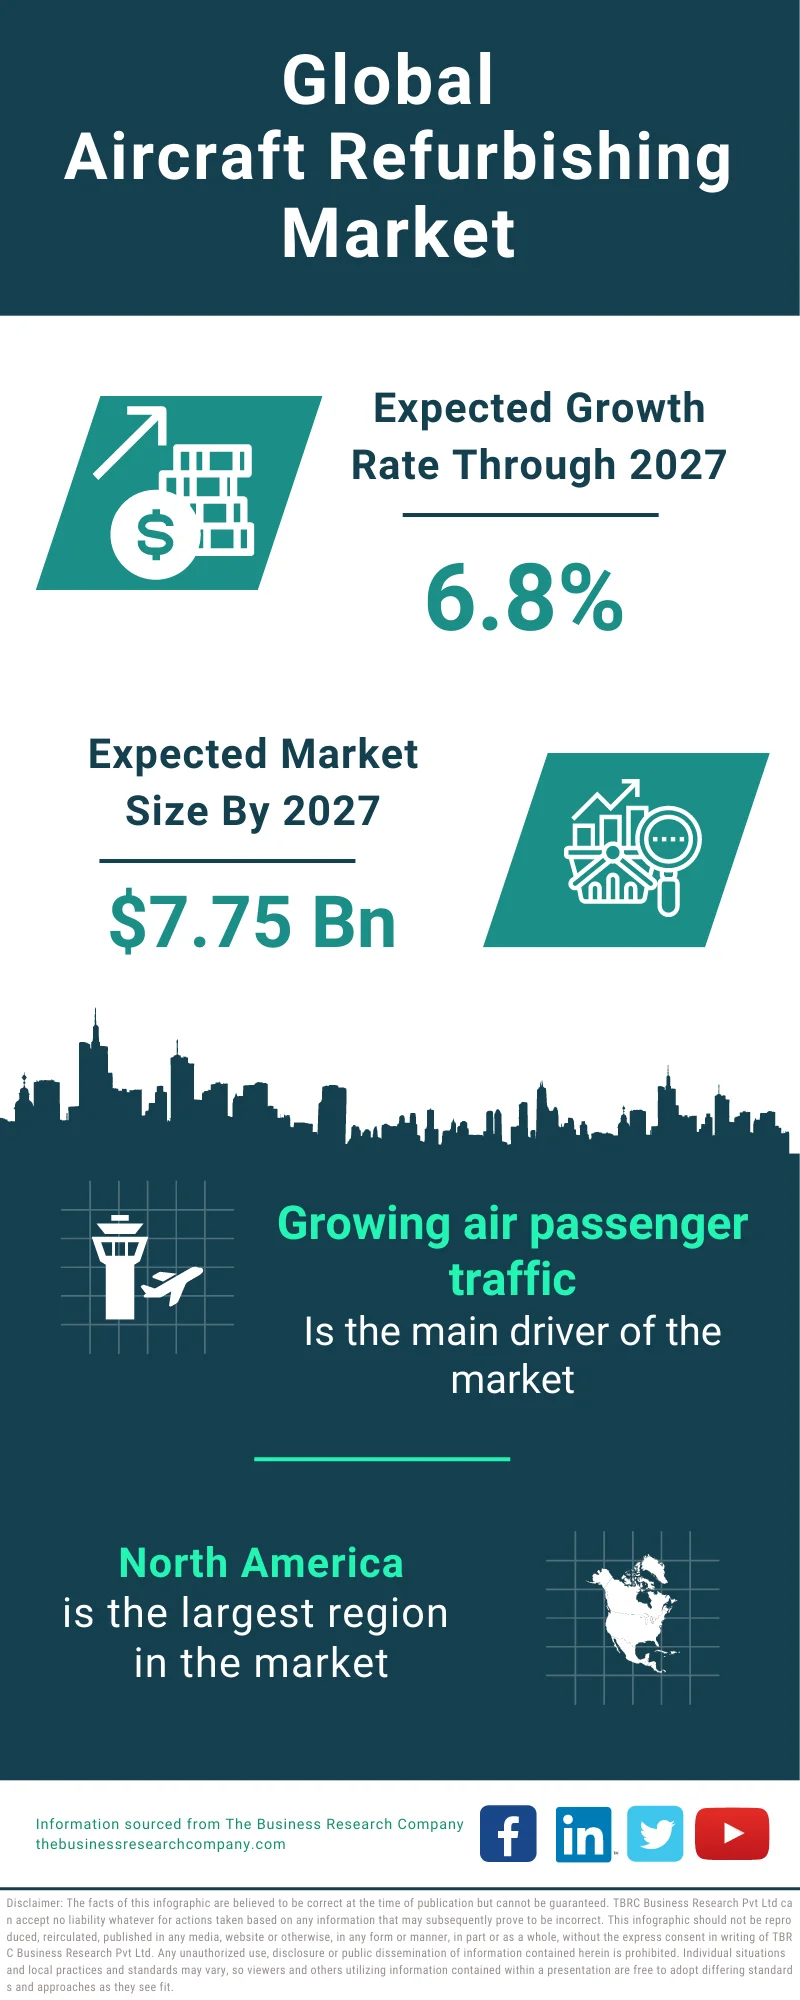 Aircraft Refurbishing Global Market Report 2023